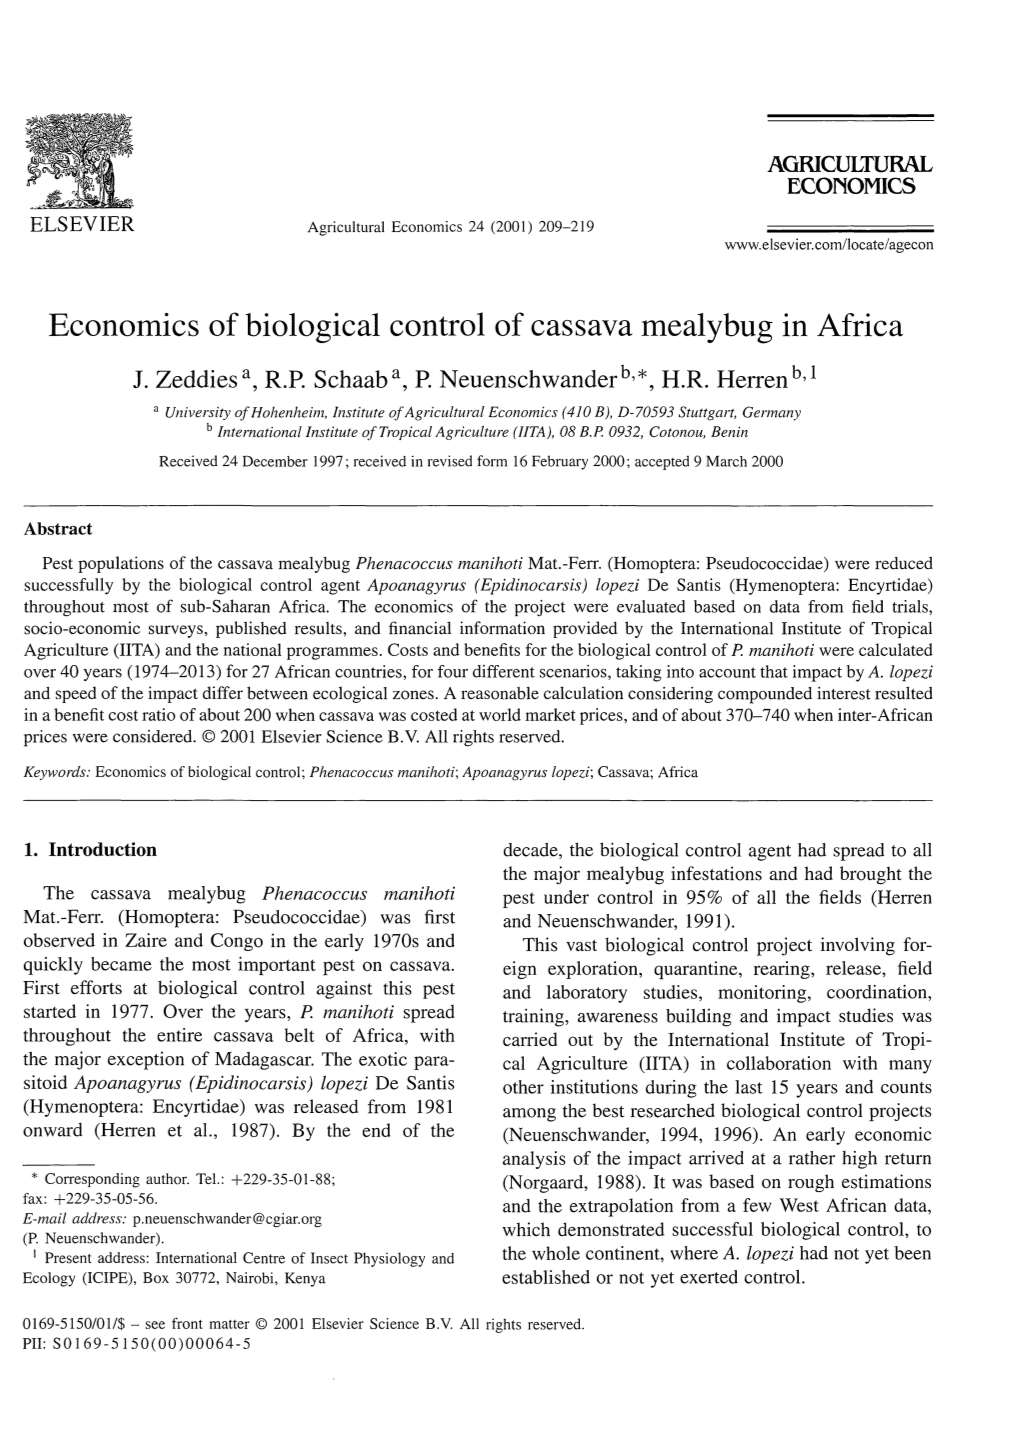 Economics of Biological Control of Cassava Mealybug in Africa